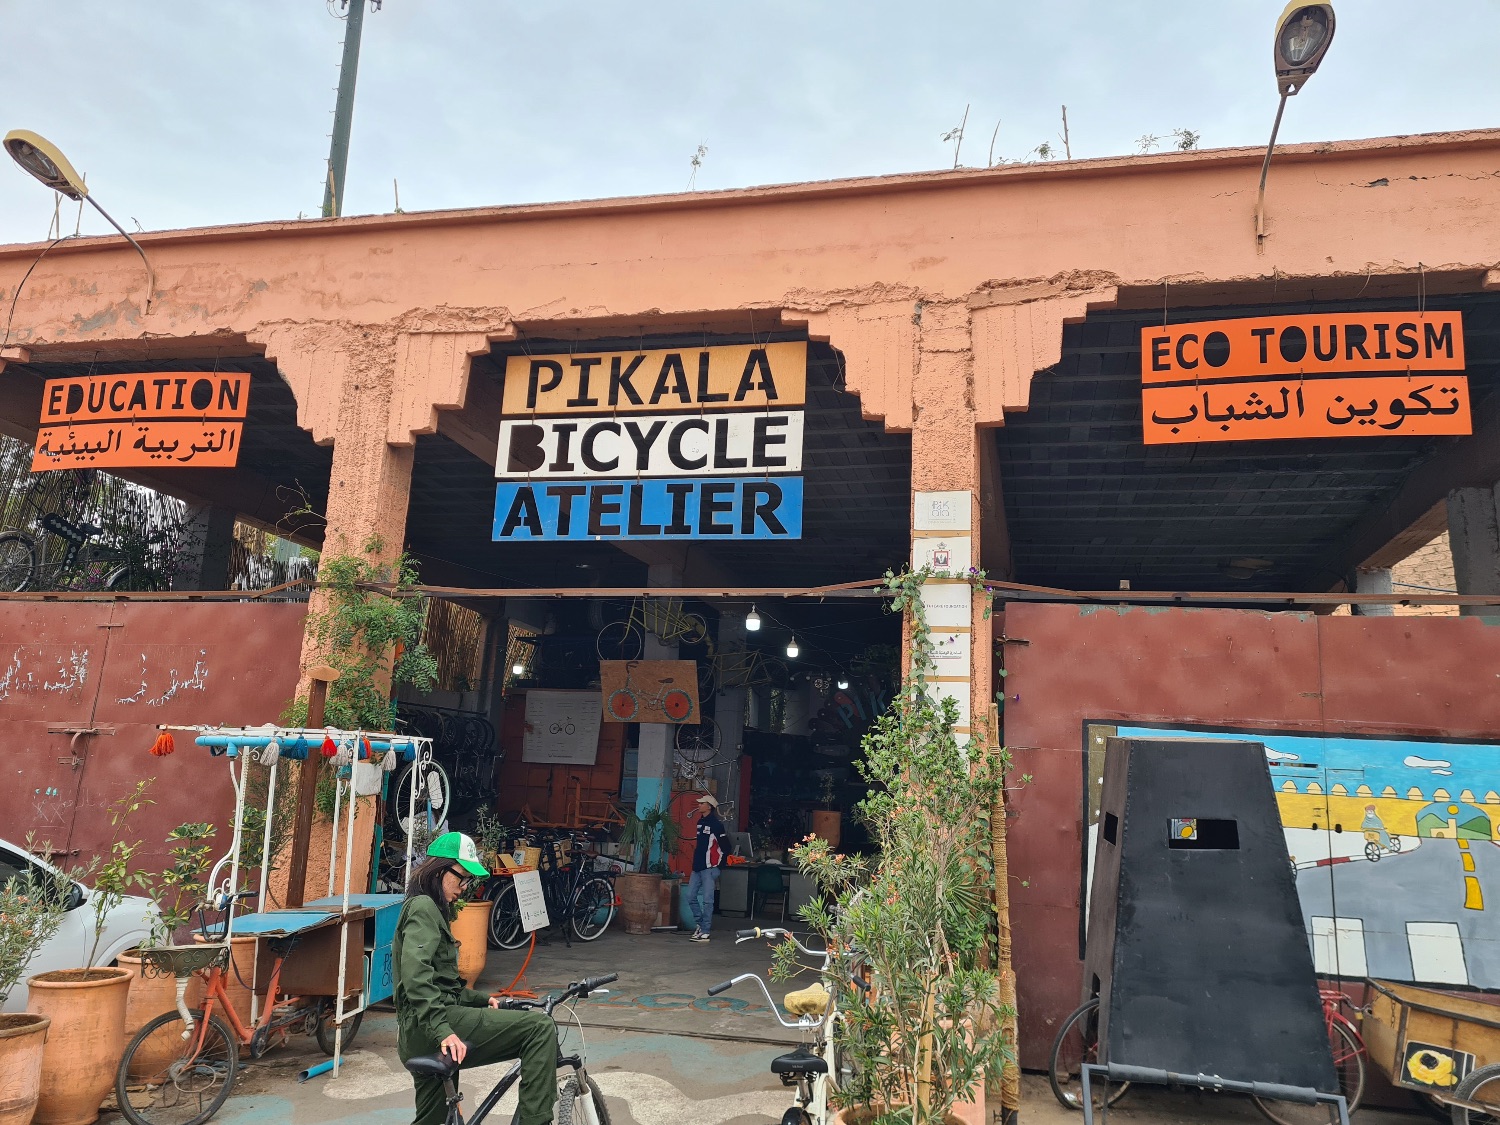 The Pikala Bicycle atelier